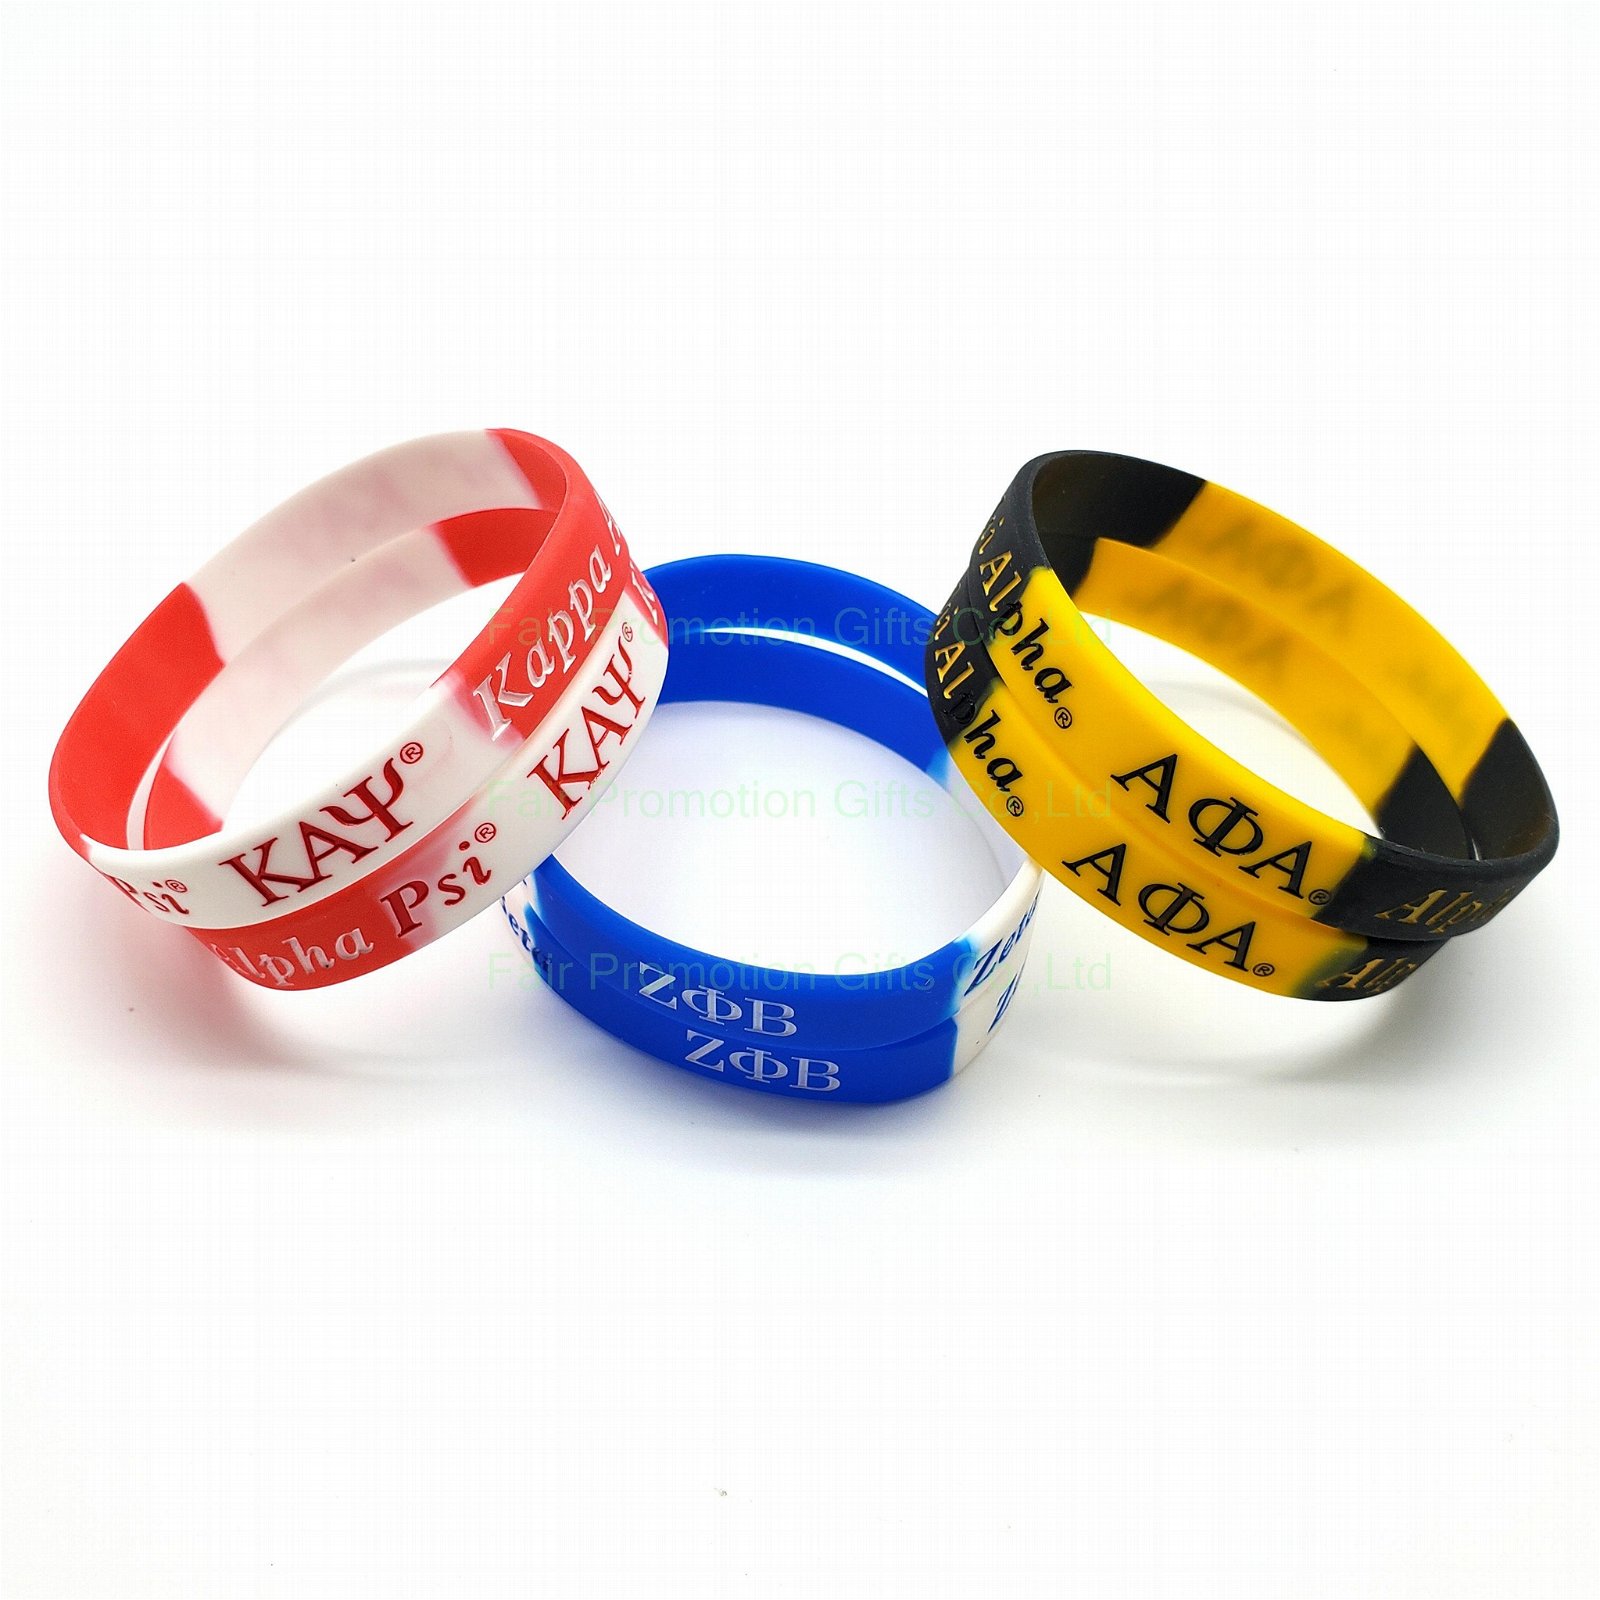 Kappa Kappa Psi Color Swirl Silicone Bracelet 3